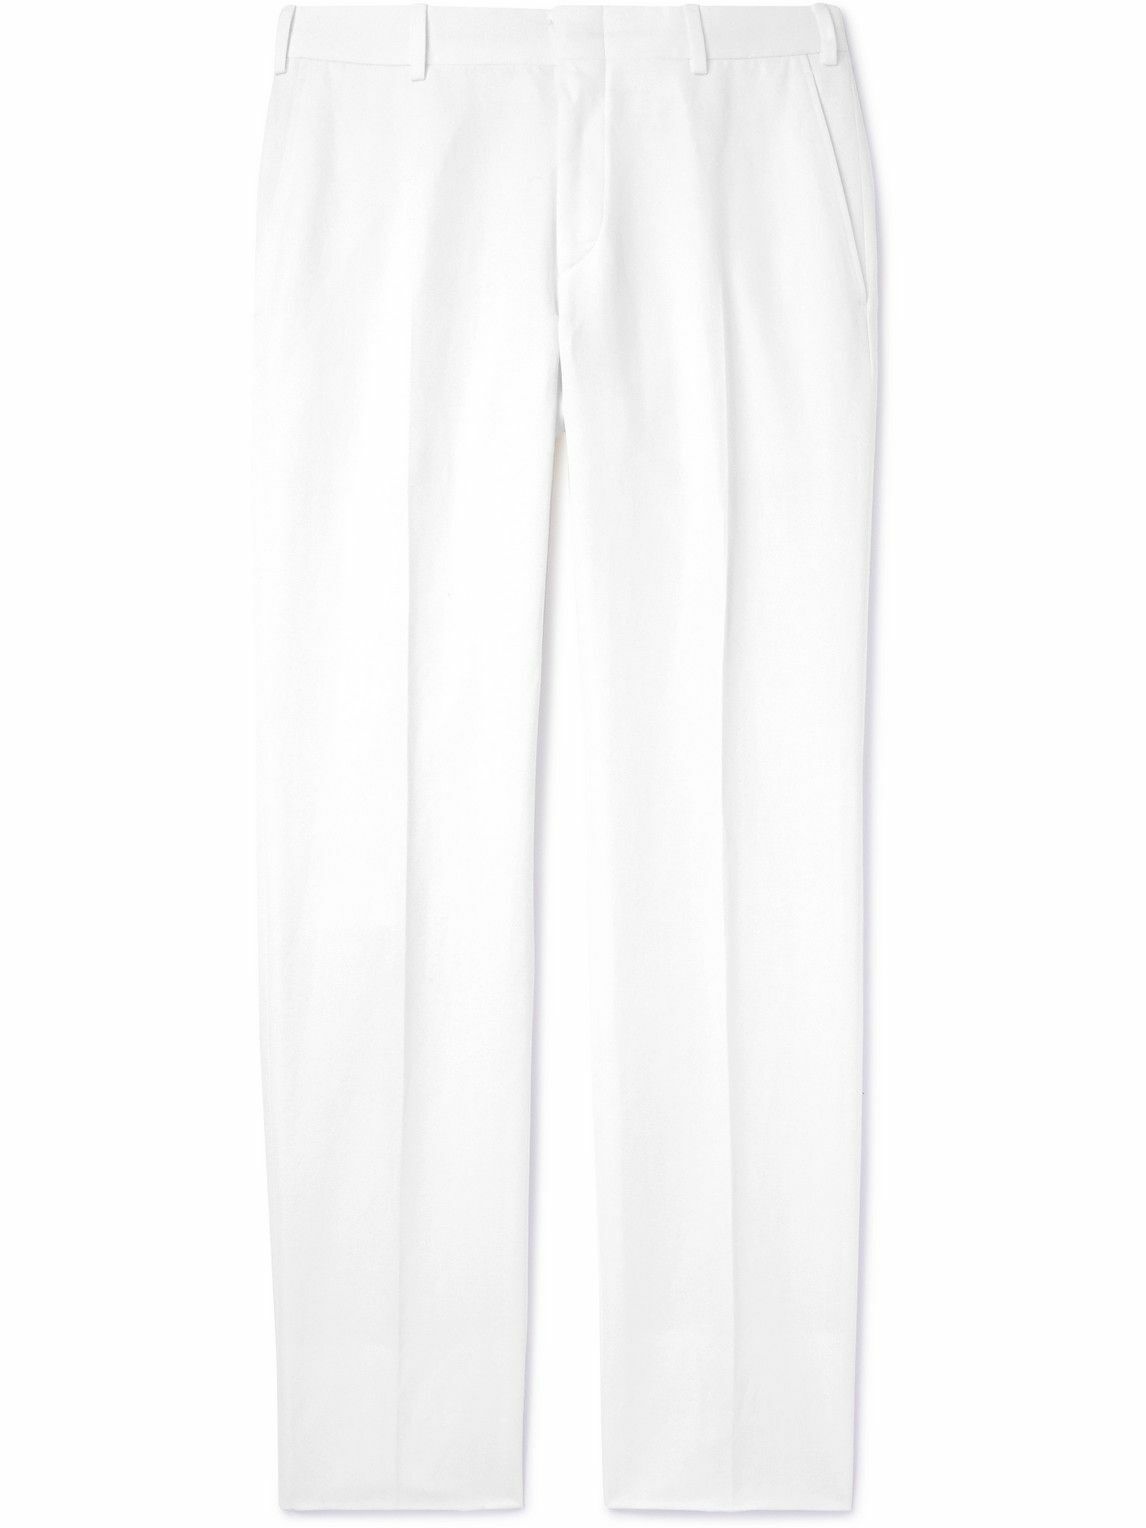 Photo: Brioni - Pienza Straight-Leg Linen and Cotton-Blend Trousers - White